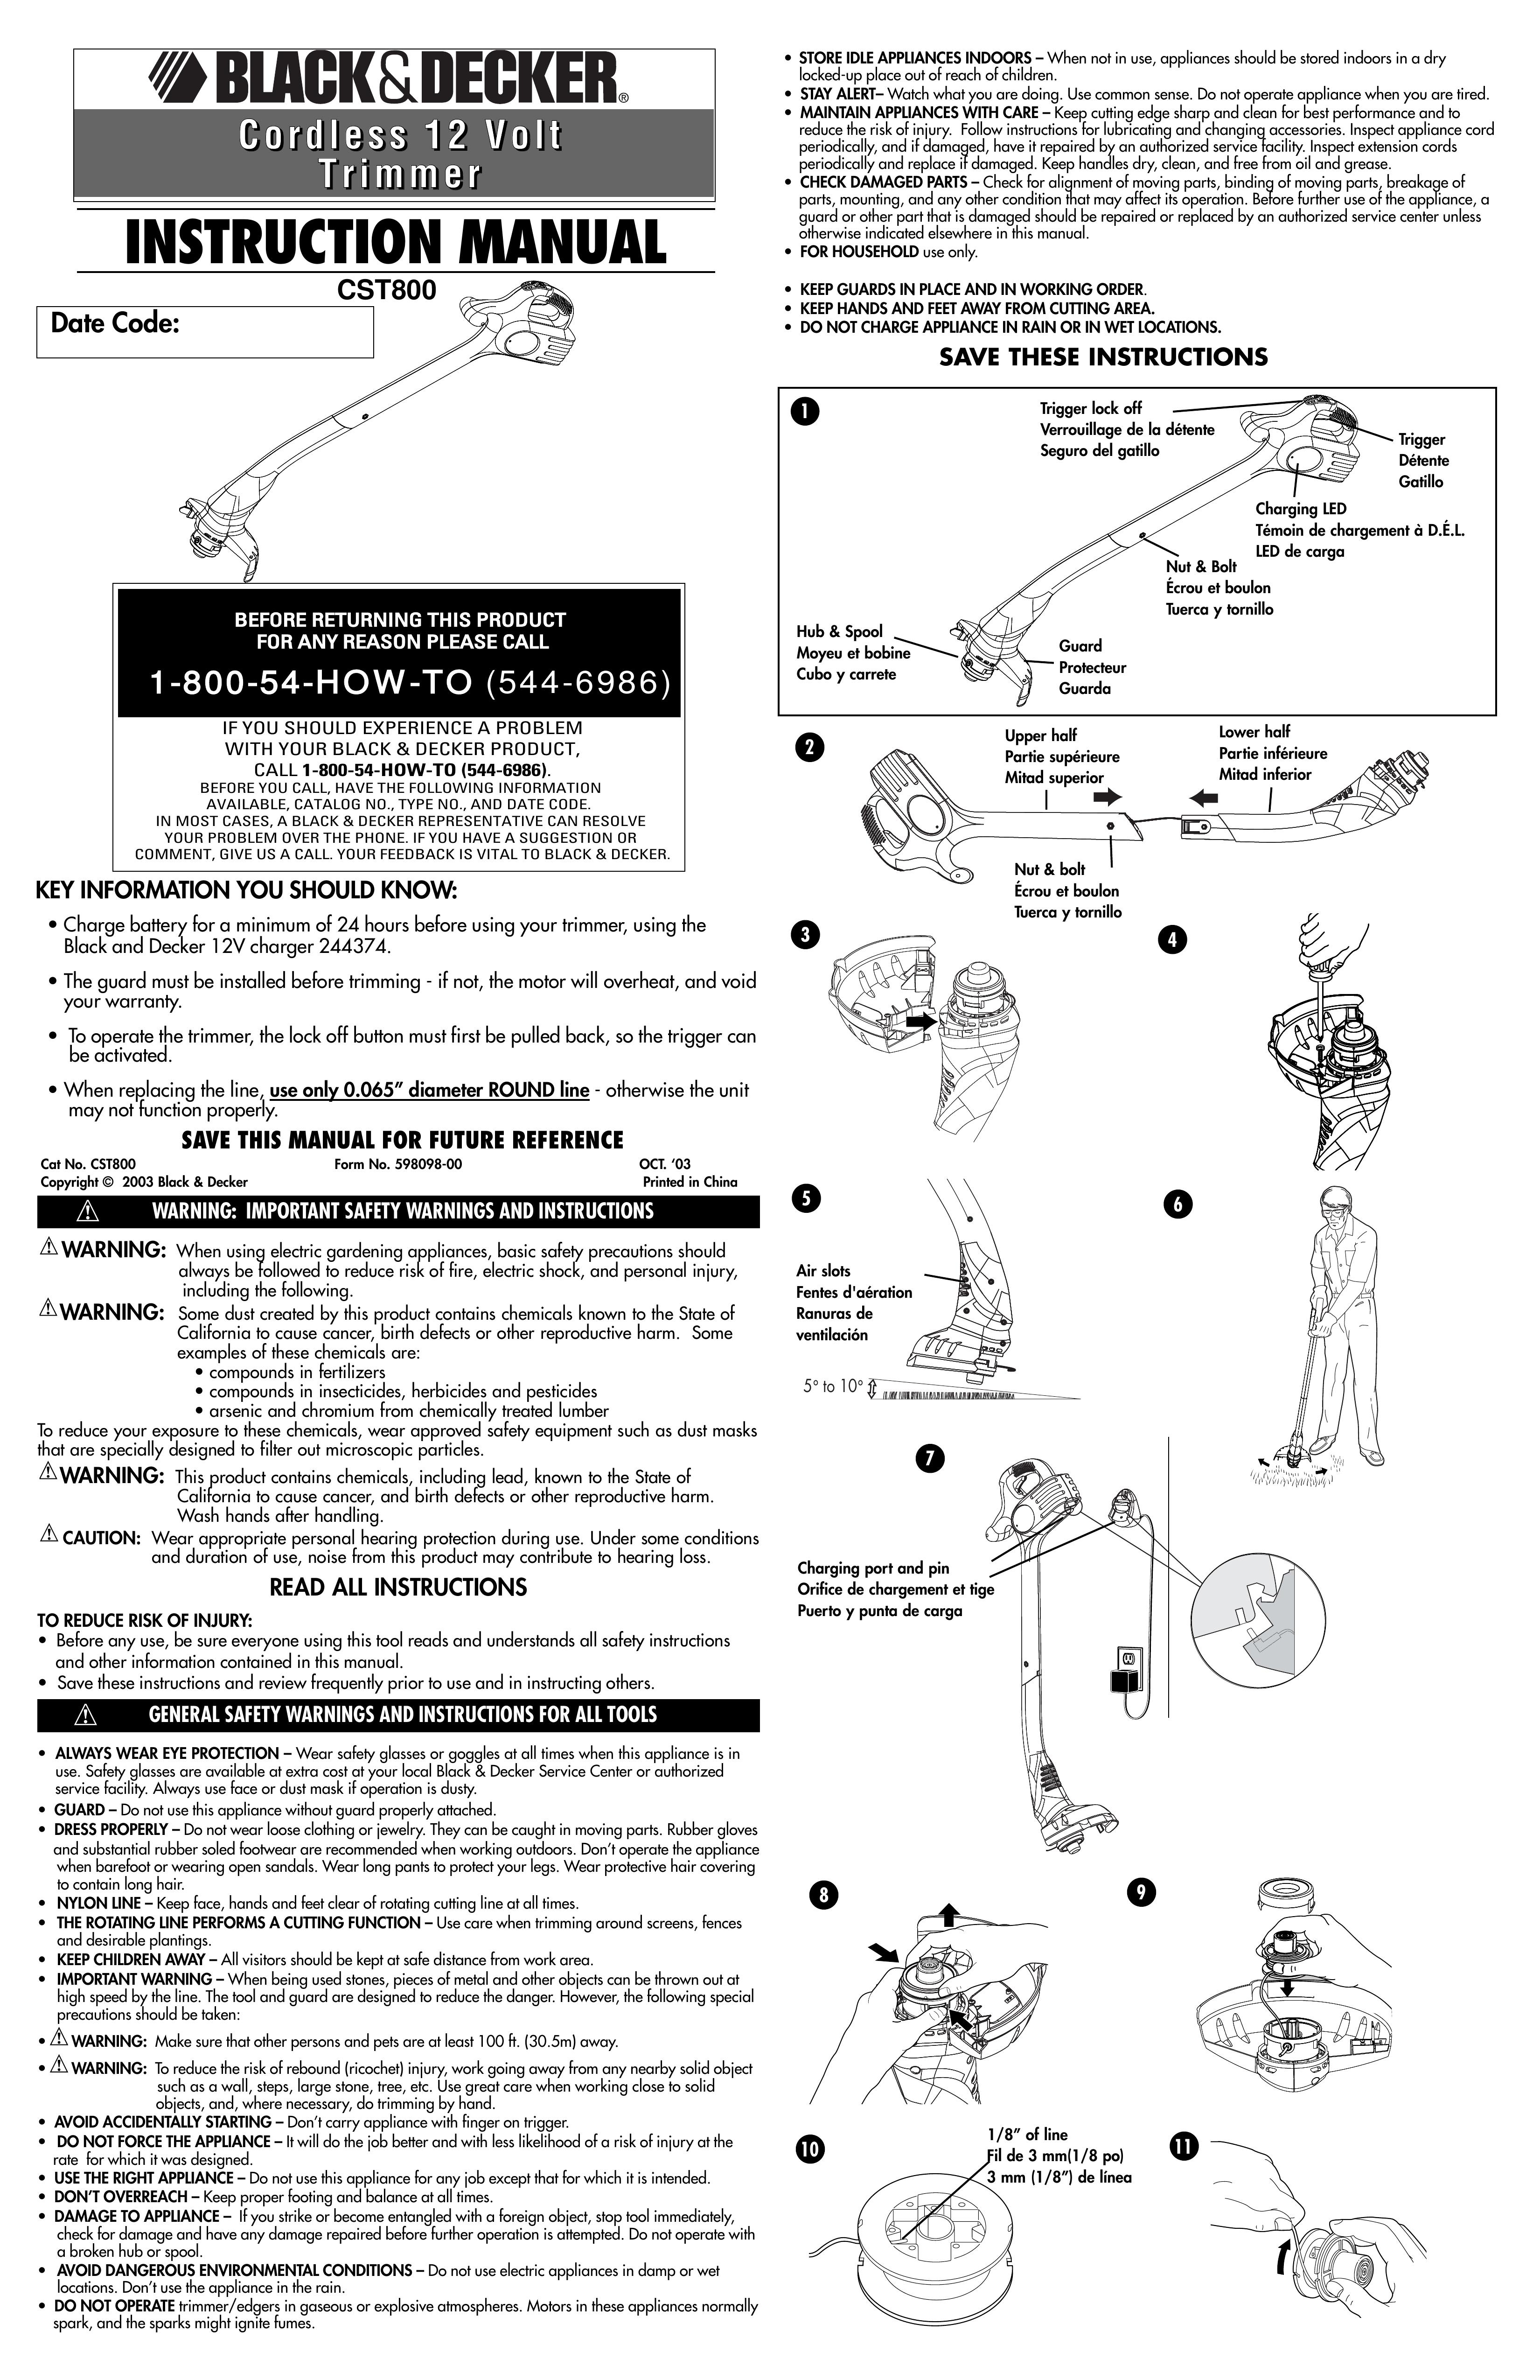 Black & Decker 598098-00 Trimmer User Manual